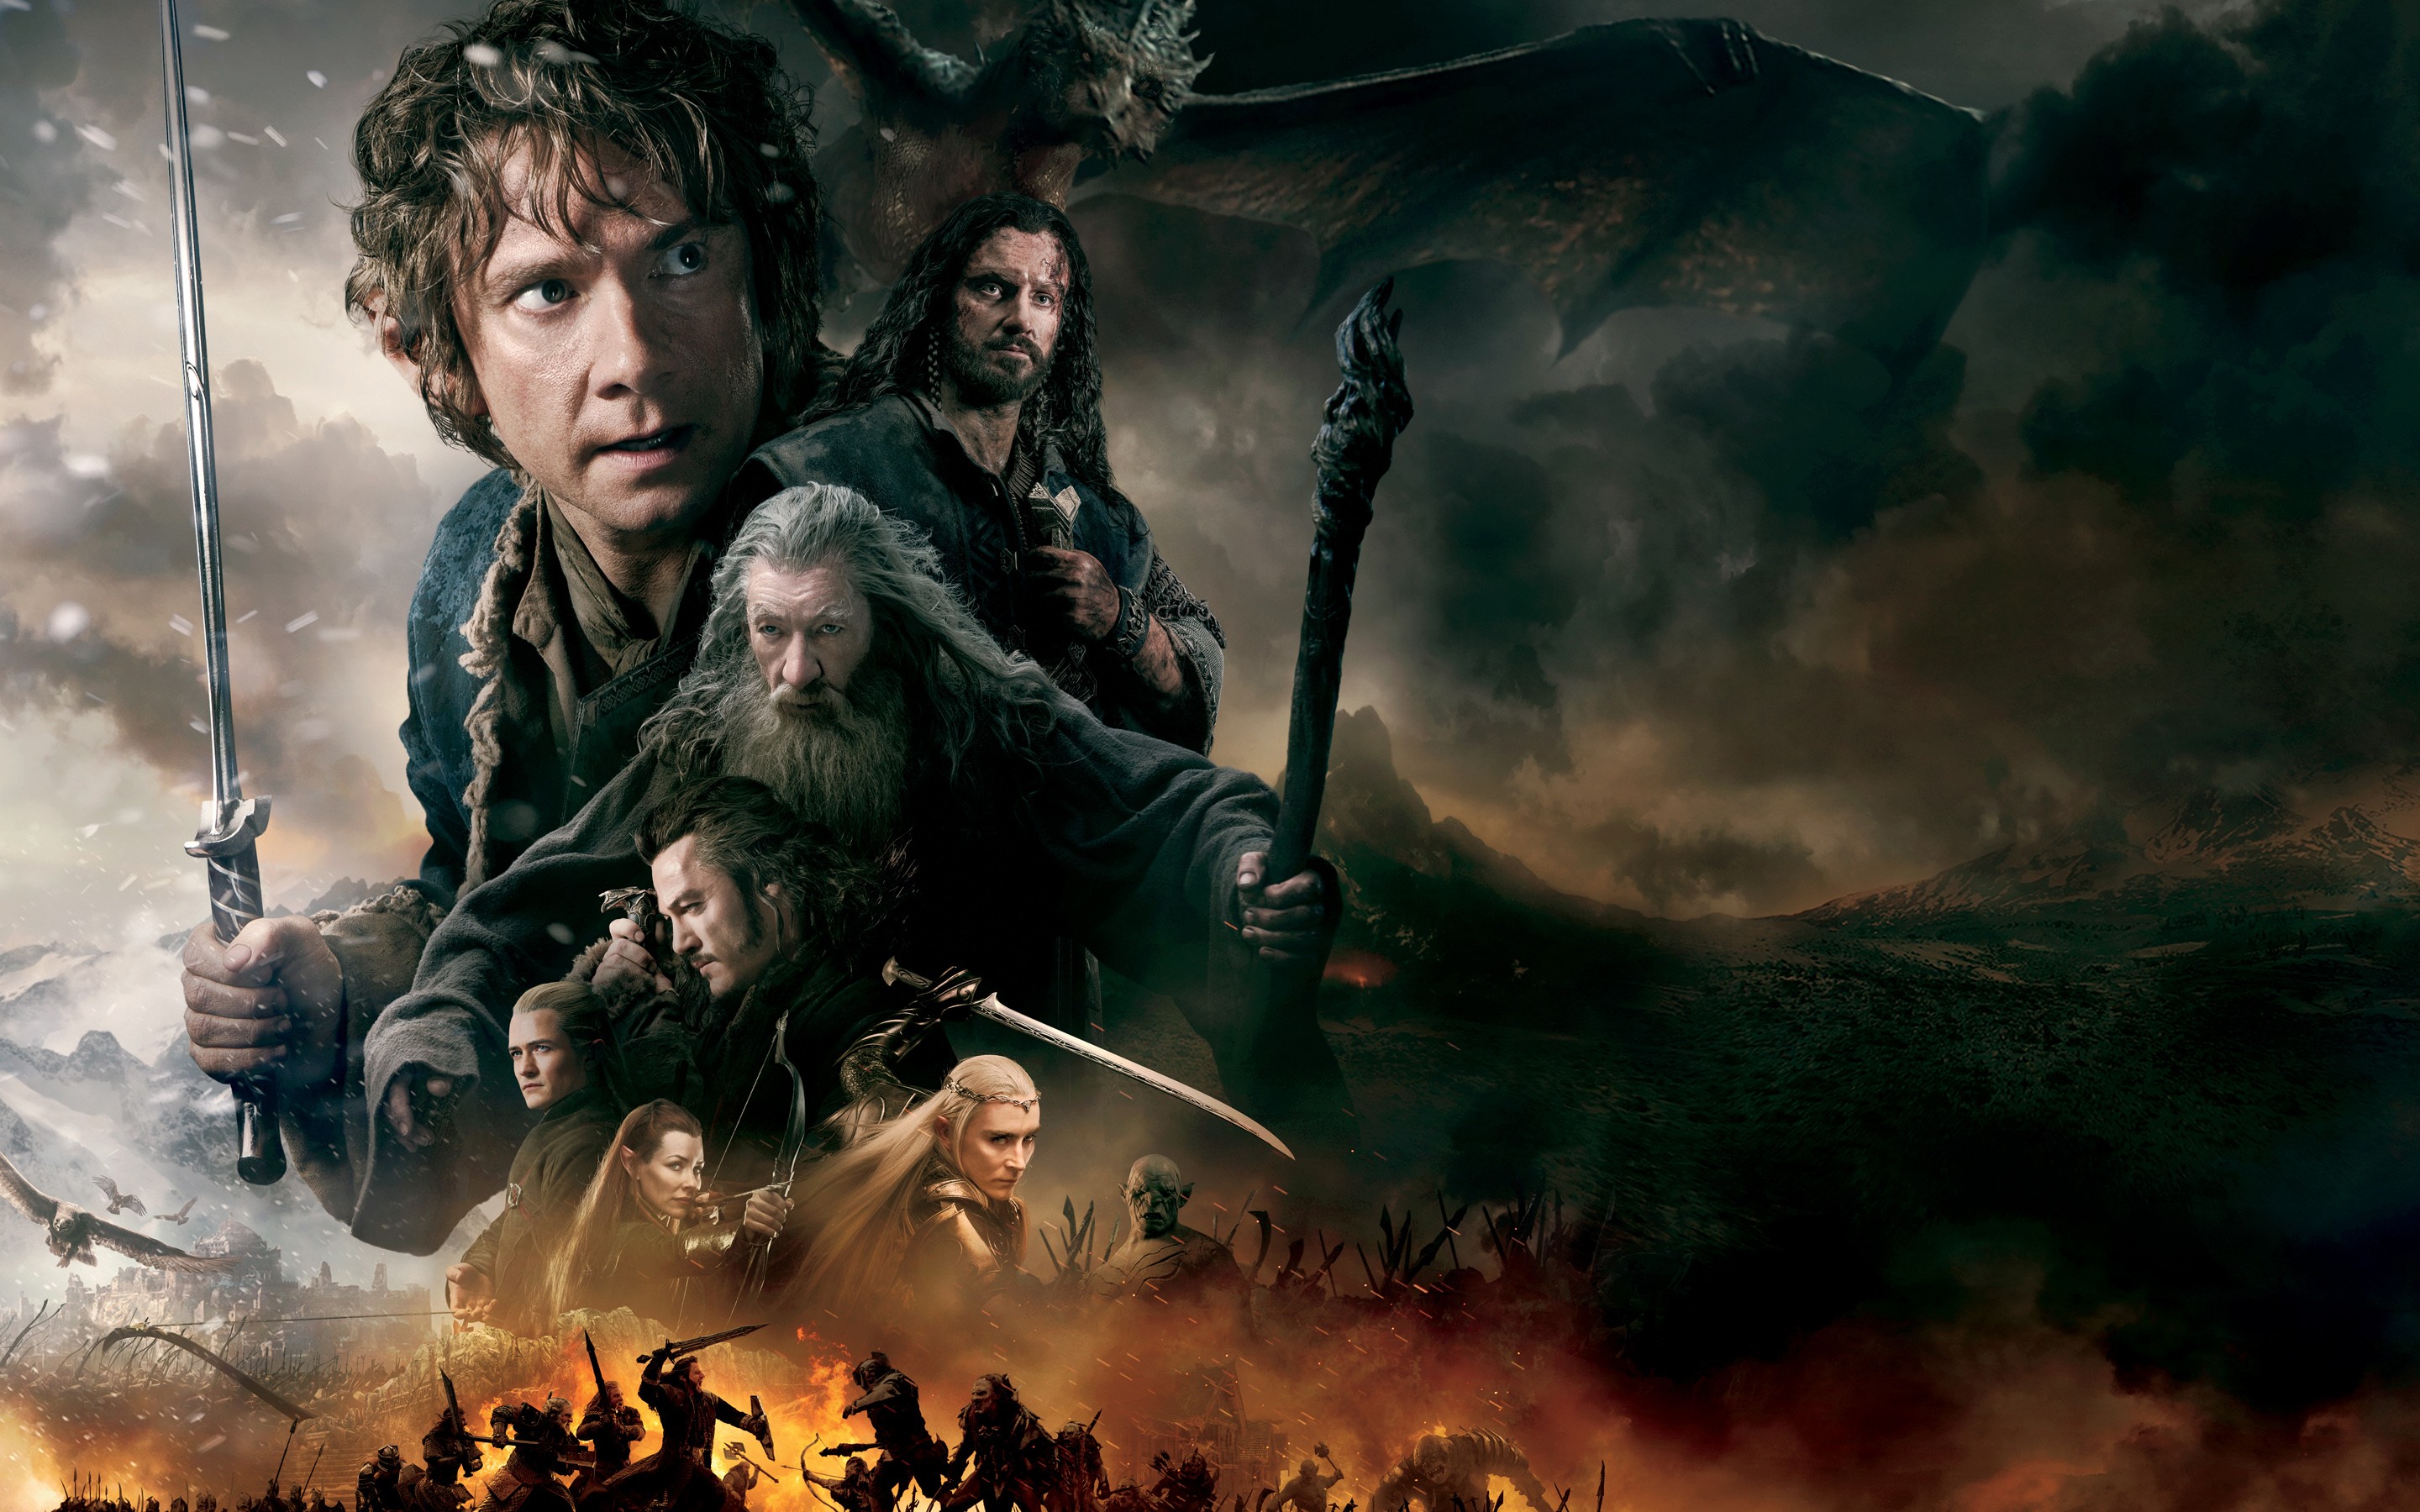 The Battle Of The Five Armies Wallpaper Hd - Bilbo Thorin Wallpaper The Hobbit - HD Wallpaper 